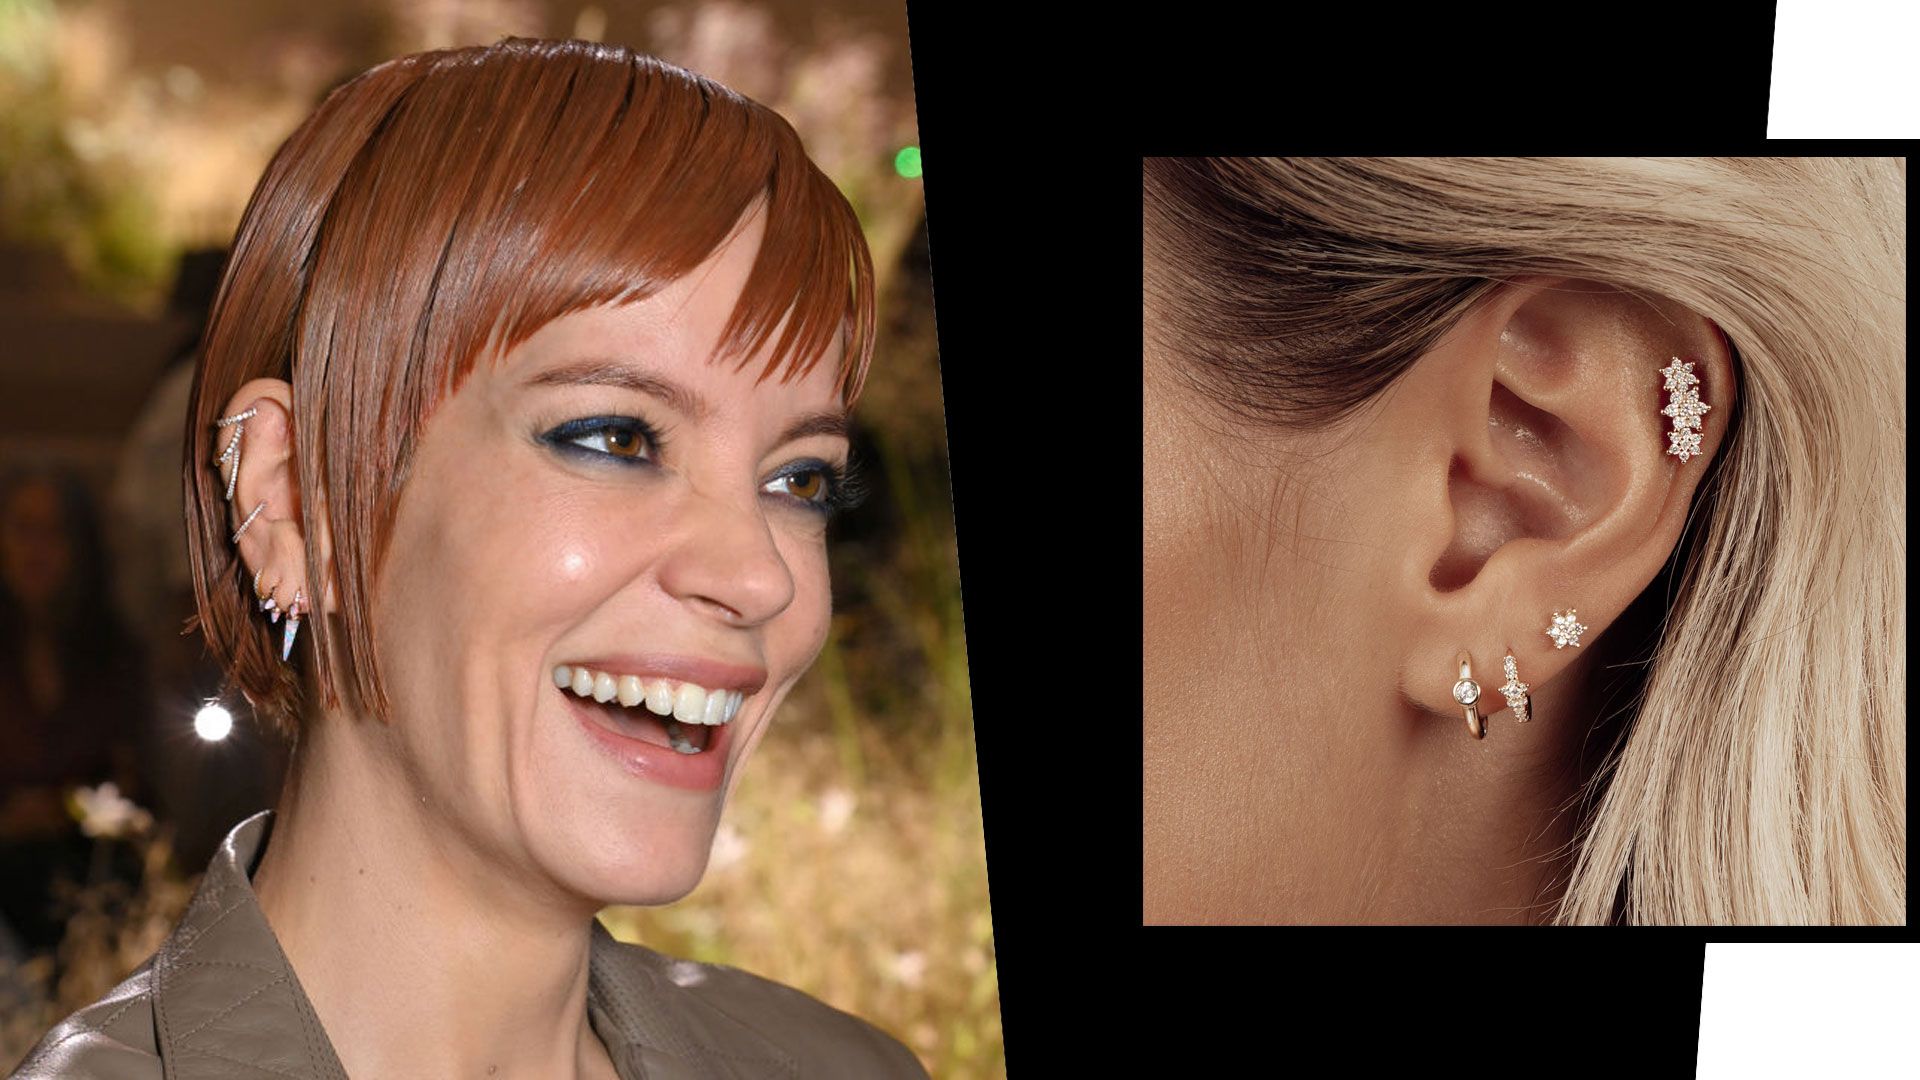 Amazon.com: Genuine Black Diamond Solitaire Stud Earring in 14K Solid Gold  Helix Tragus Cartilage Upper Ear Piercing Jewelry Hypoallergenic Internally  Threaded Flat Back Earring For Men Women Girls (0.04 - 0.10 Carat),